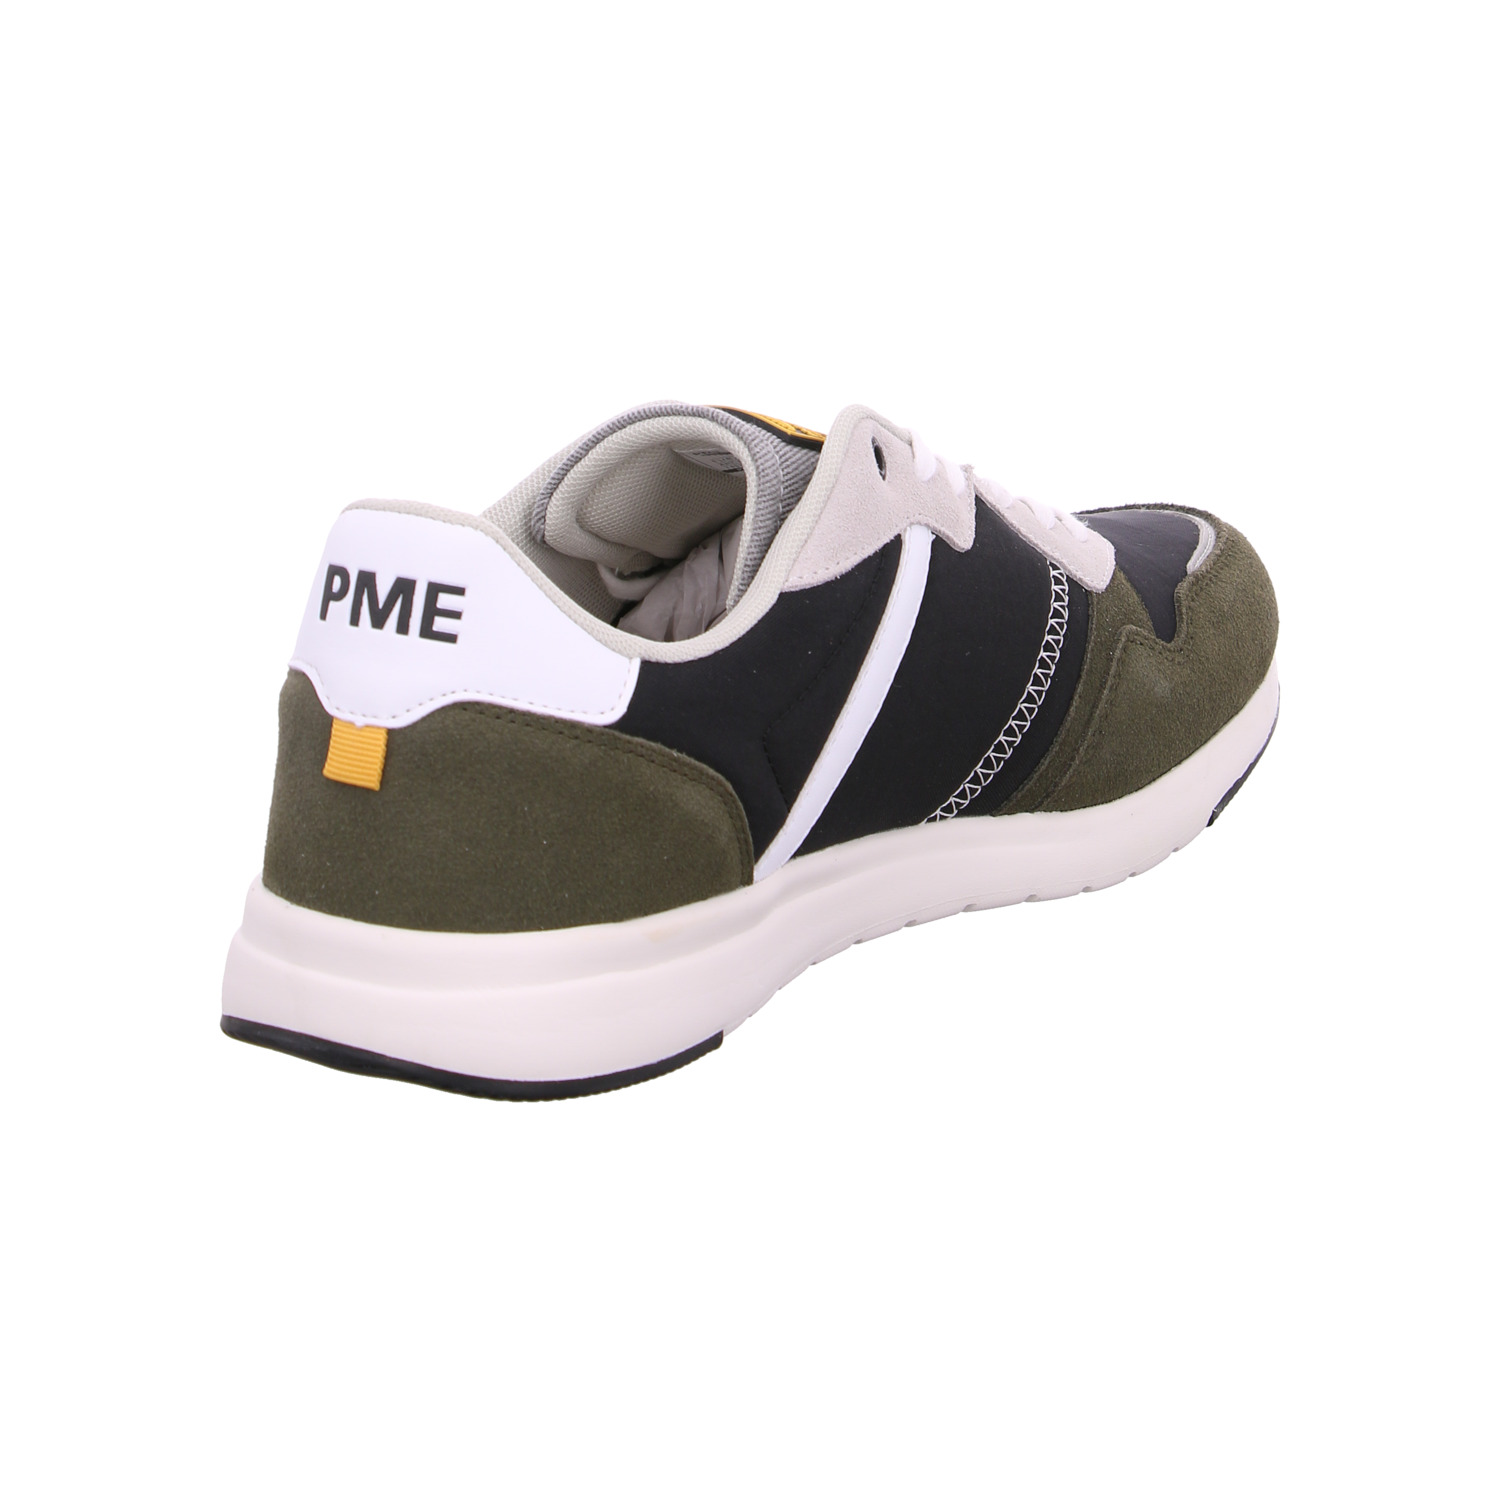 pme-legend-sneaker-grün-119197-40